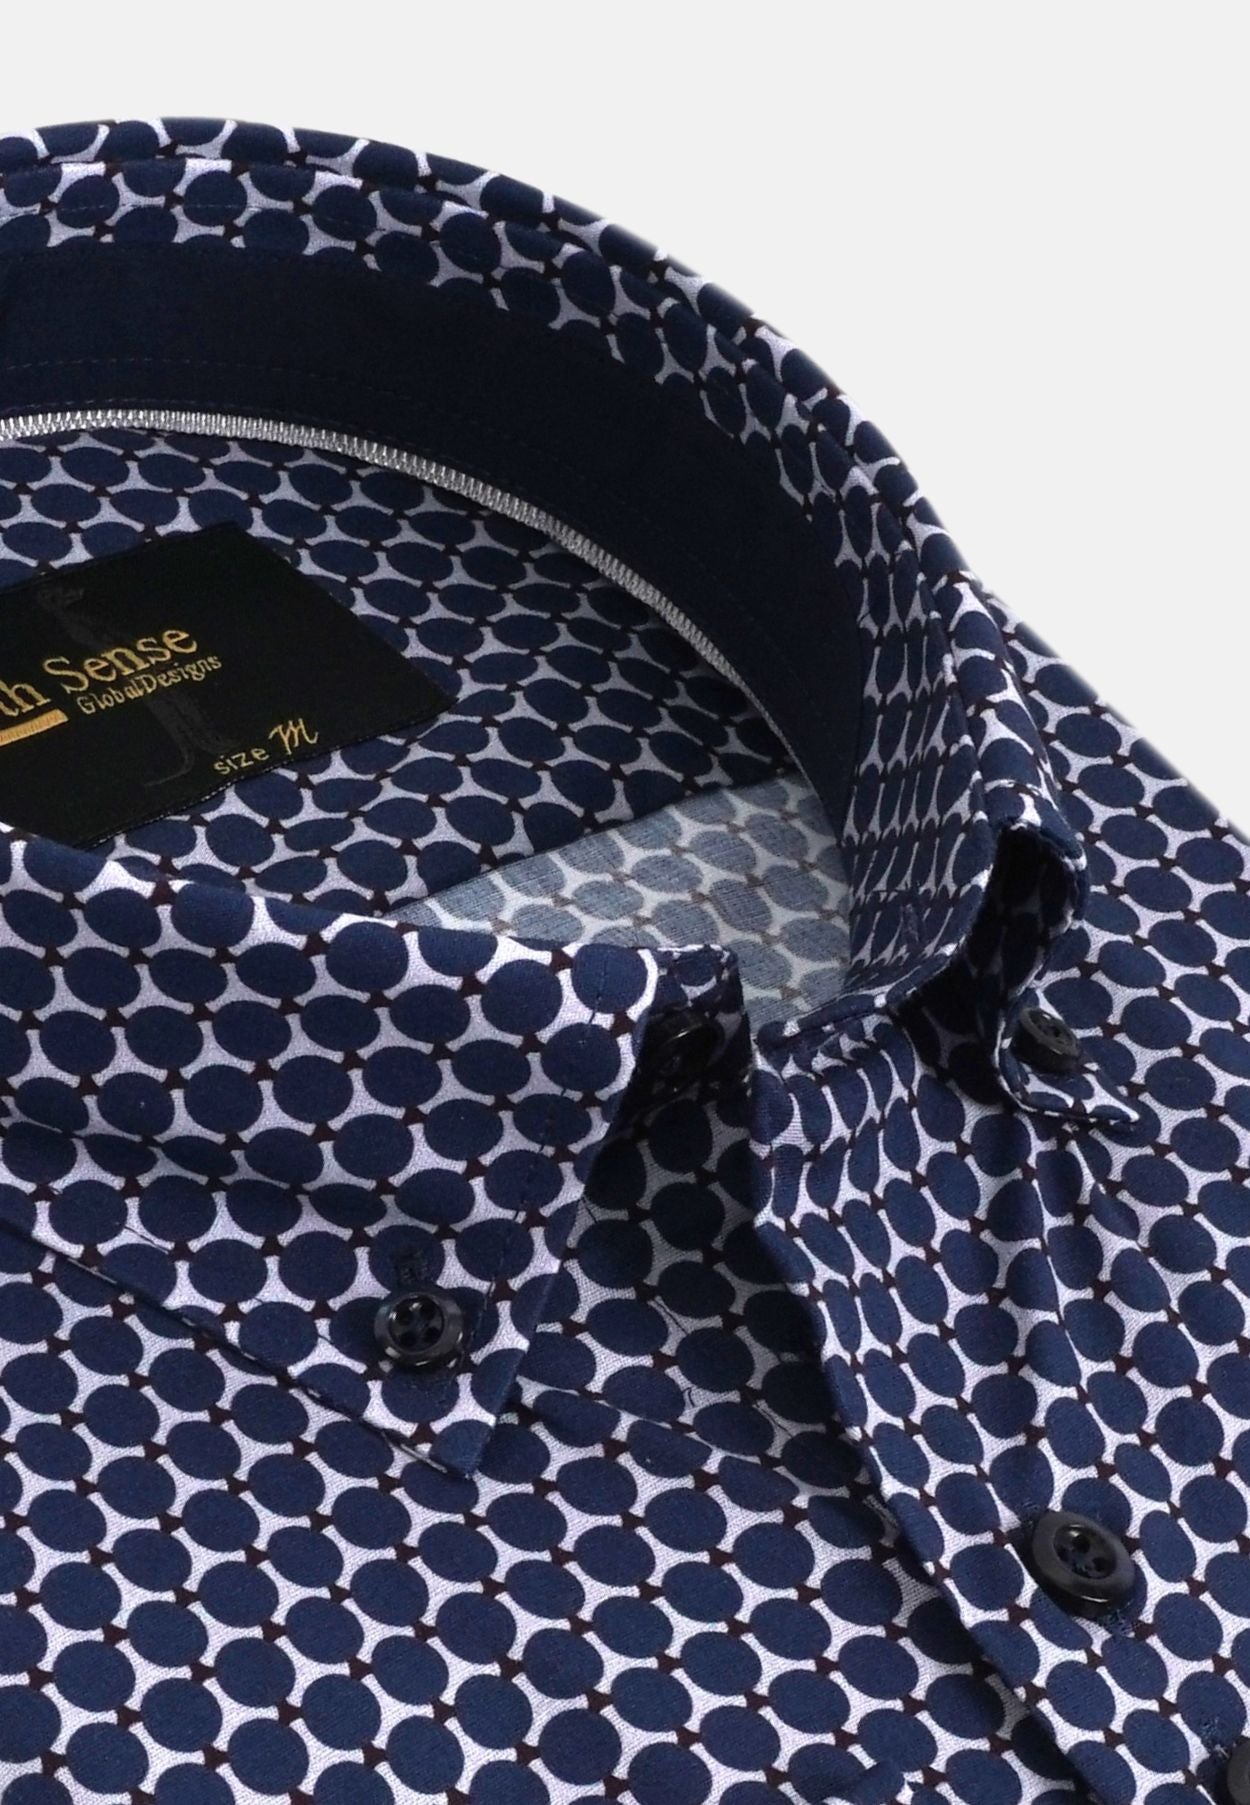 Men's Button Down Navy/Burgundy Circle Print Shirt-Collar View